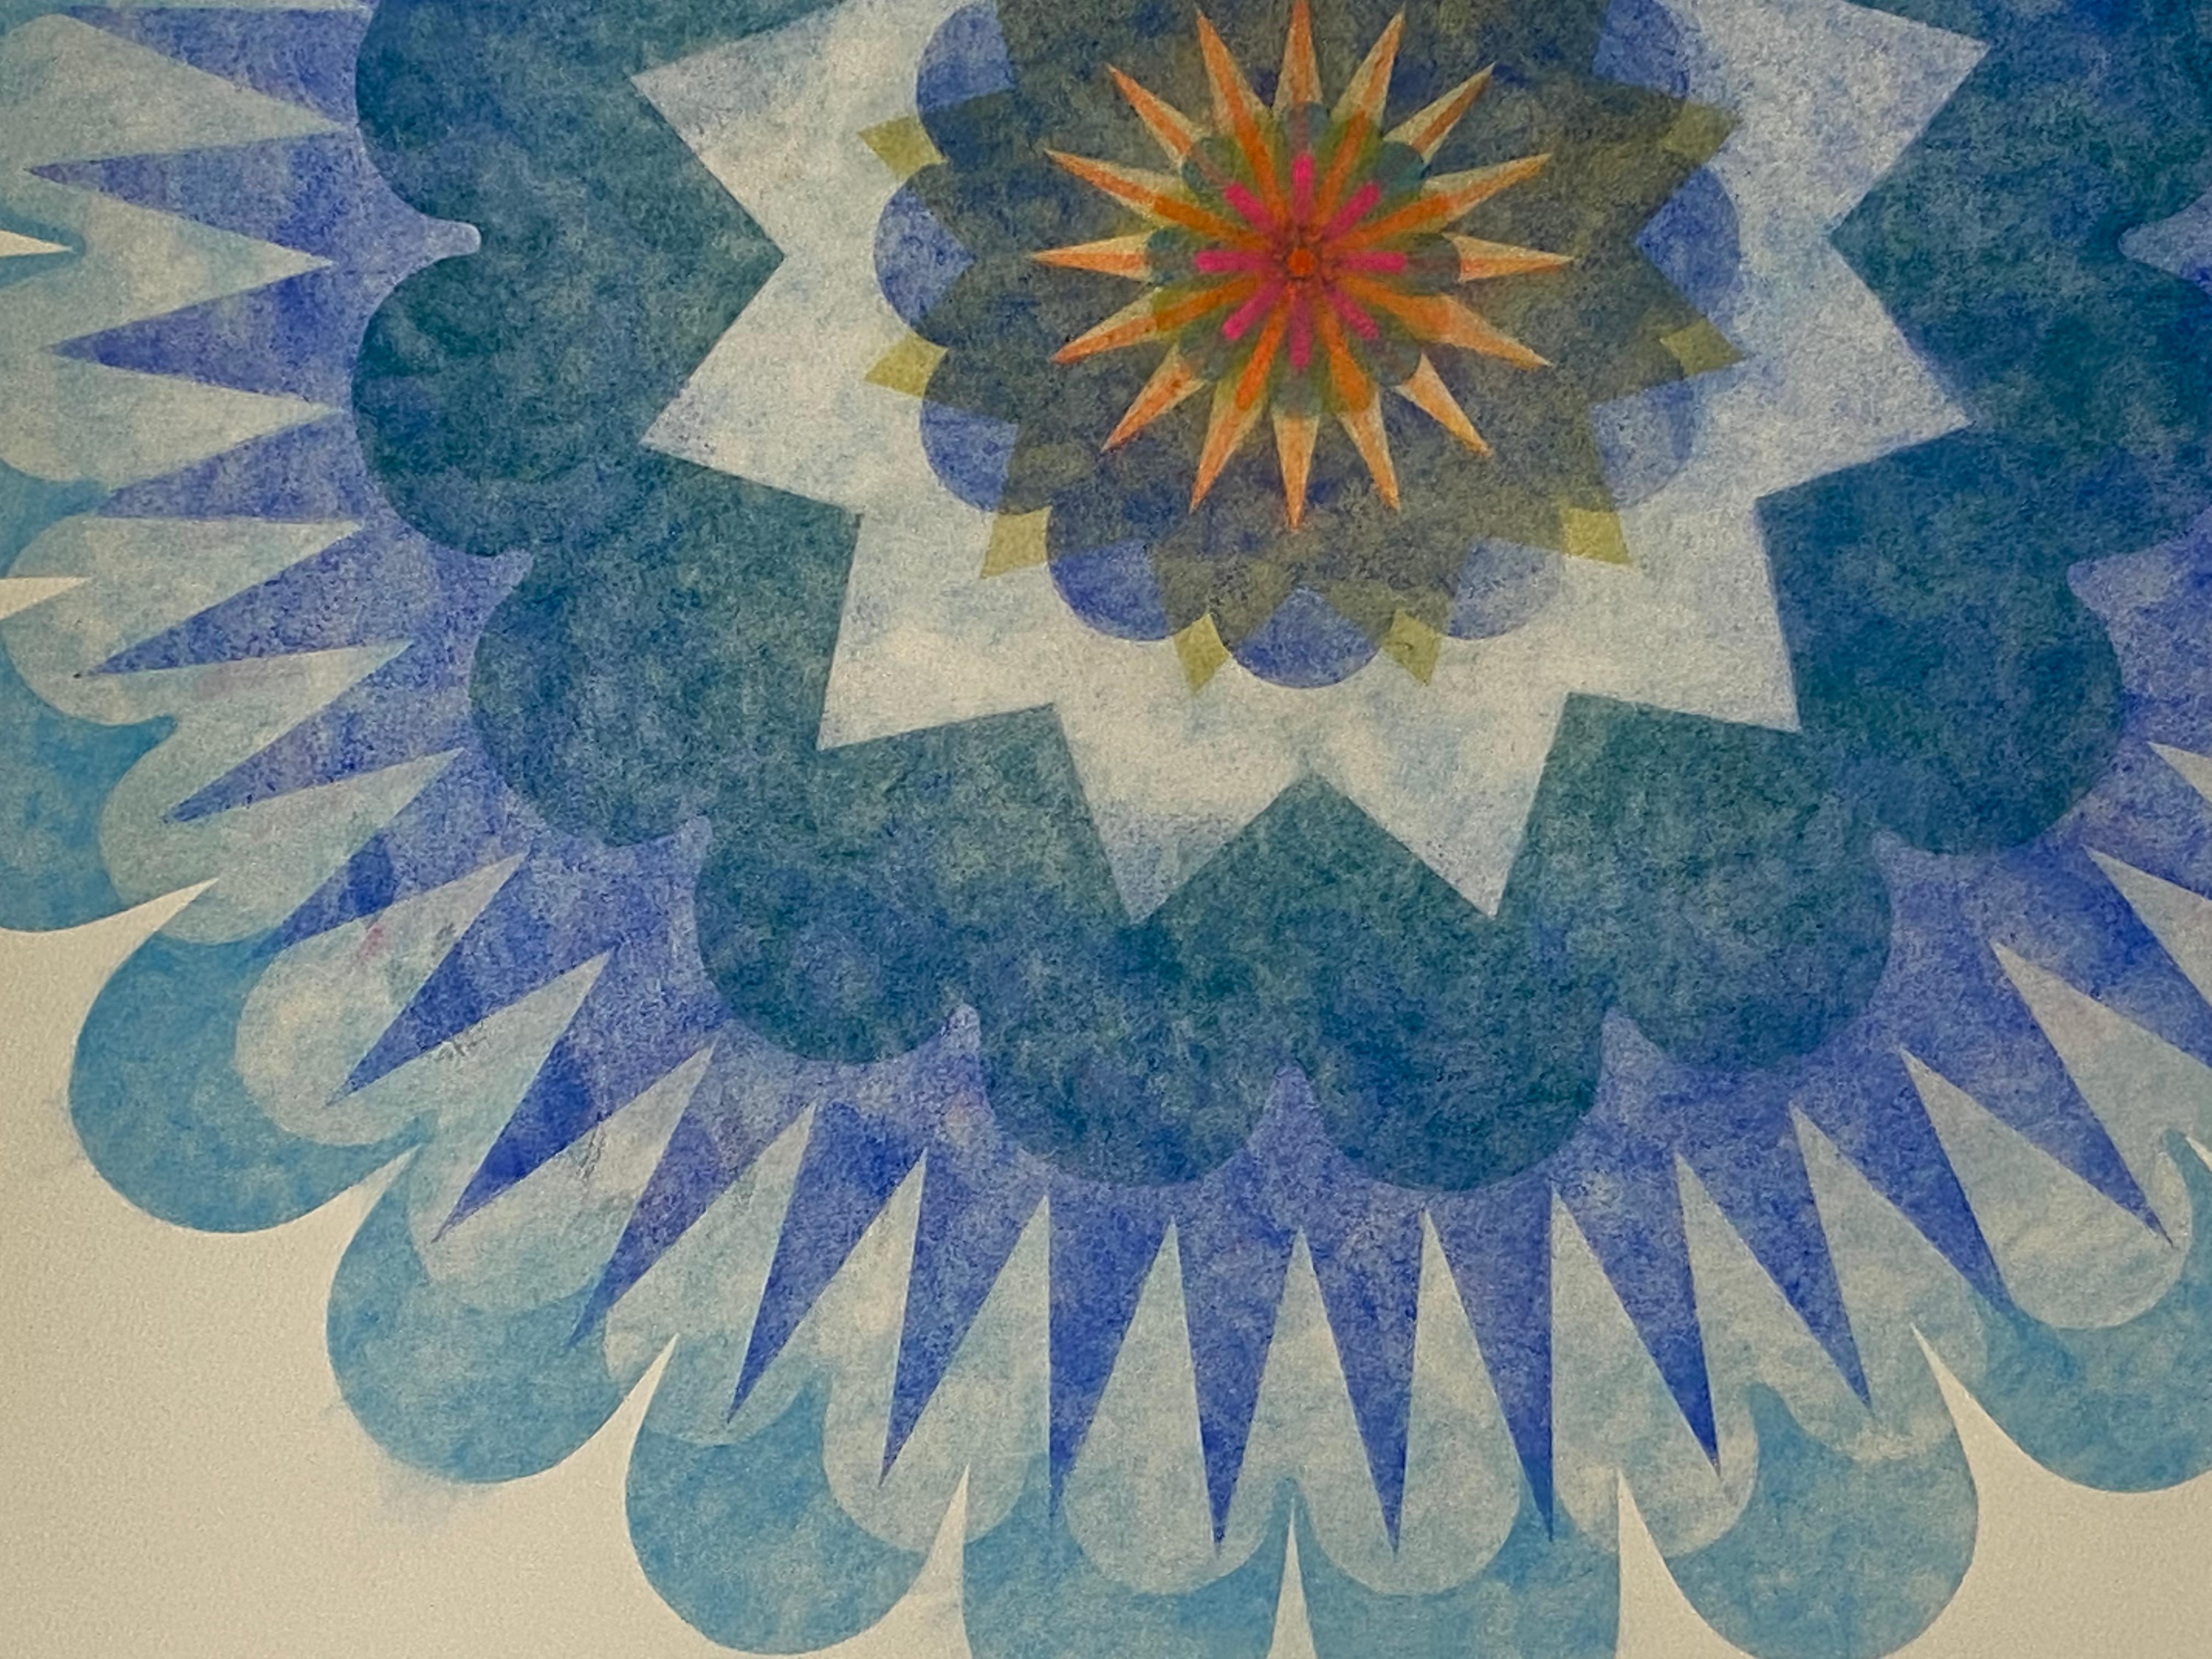 Poptic 24, Flower Mandala, Light Blue, Orange, Bright Red, Yellow - Contemporary Art by Mary Judge